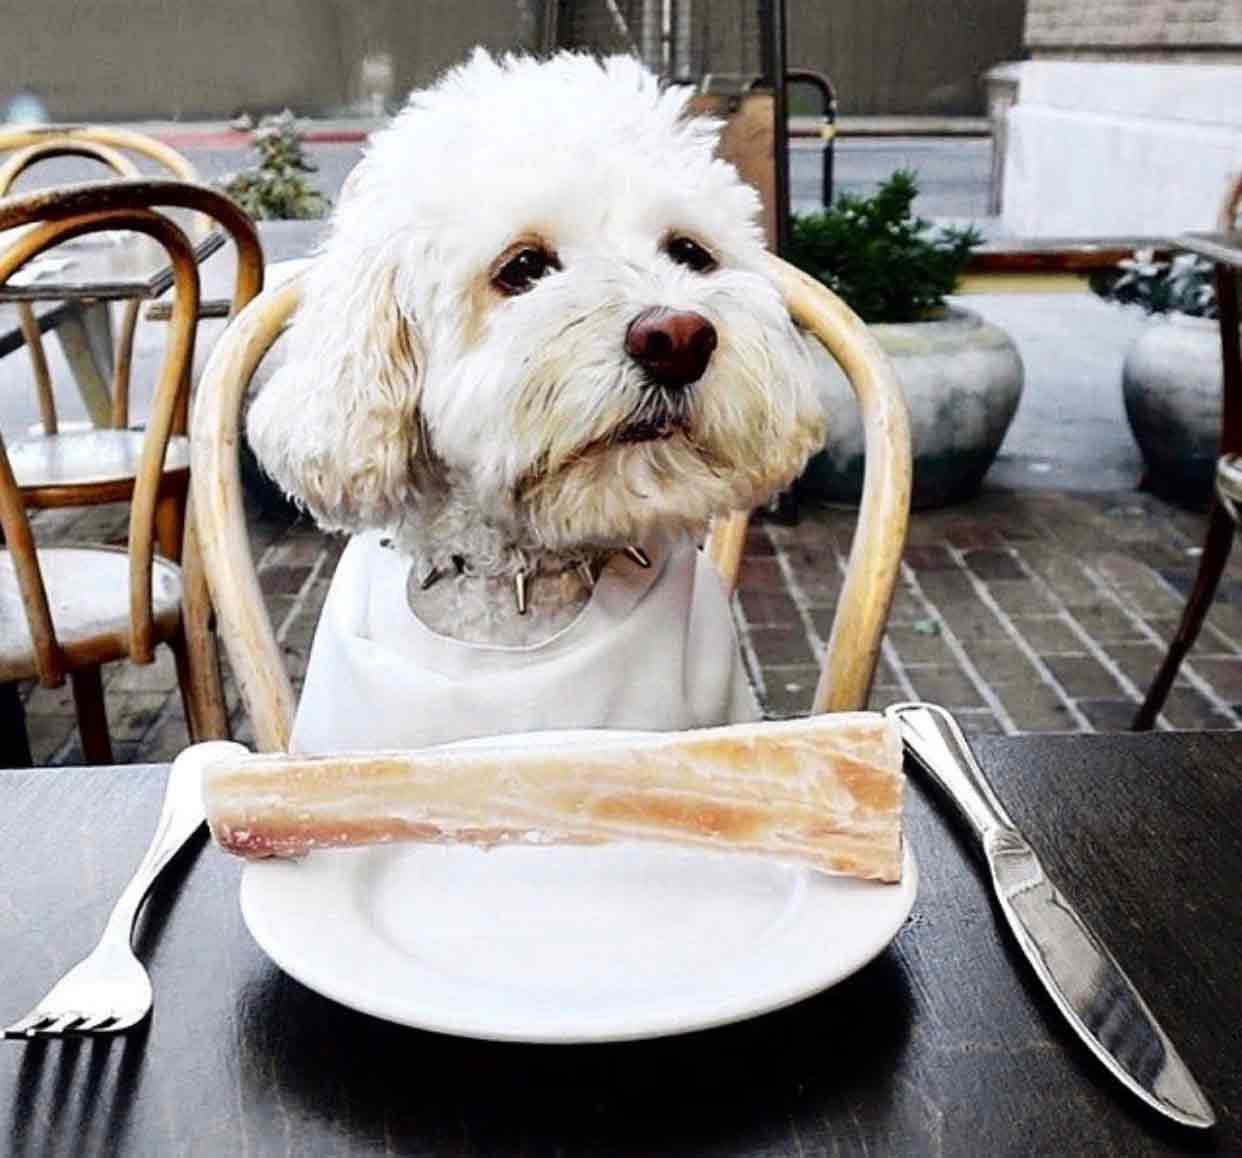 Dog-friendly restaurants near you